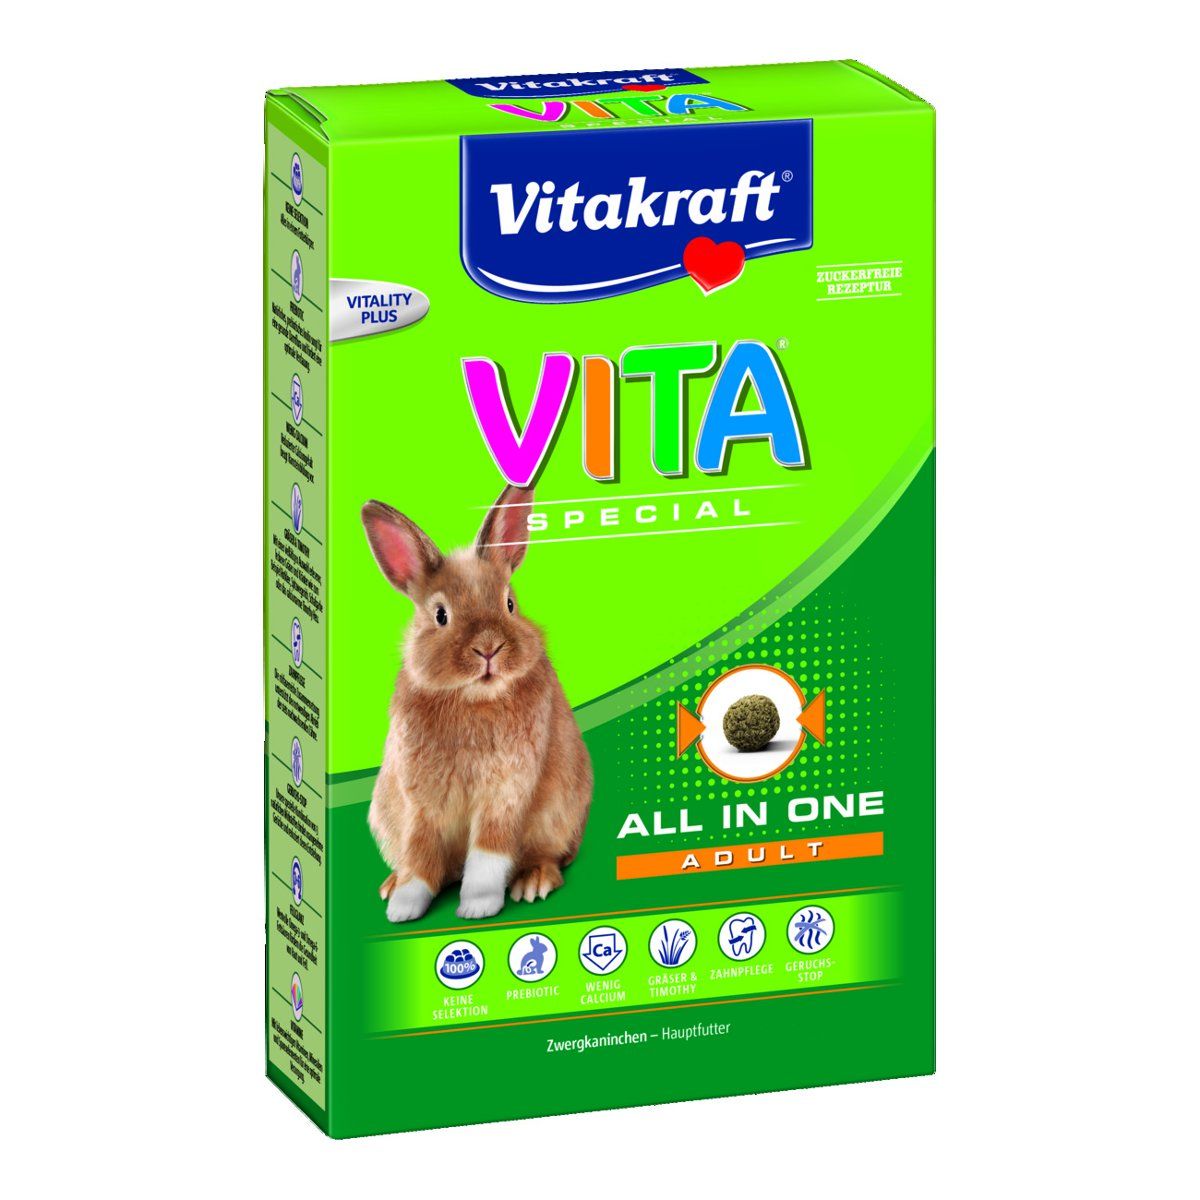 VITAKRAFT Vita Special Adult (Regular) - Zwergkaninchen